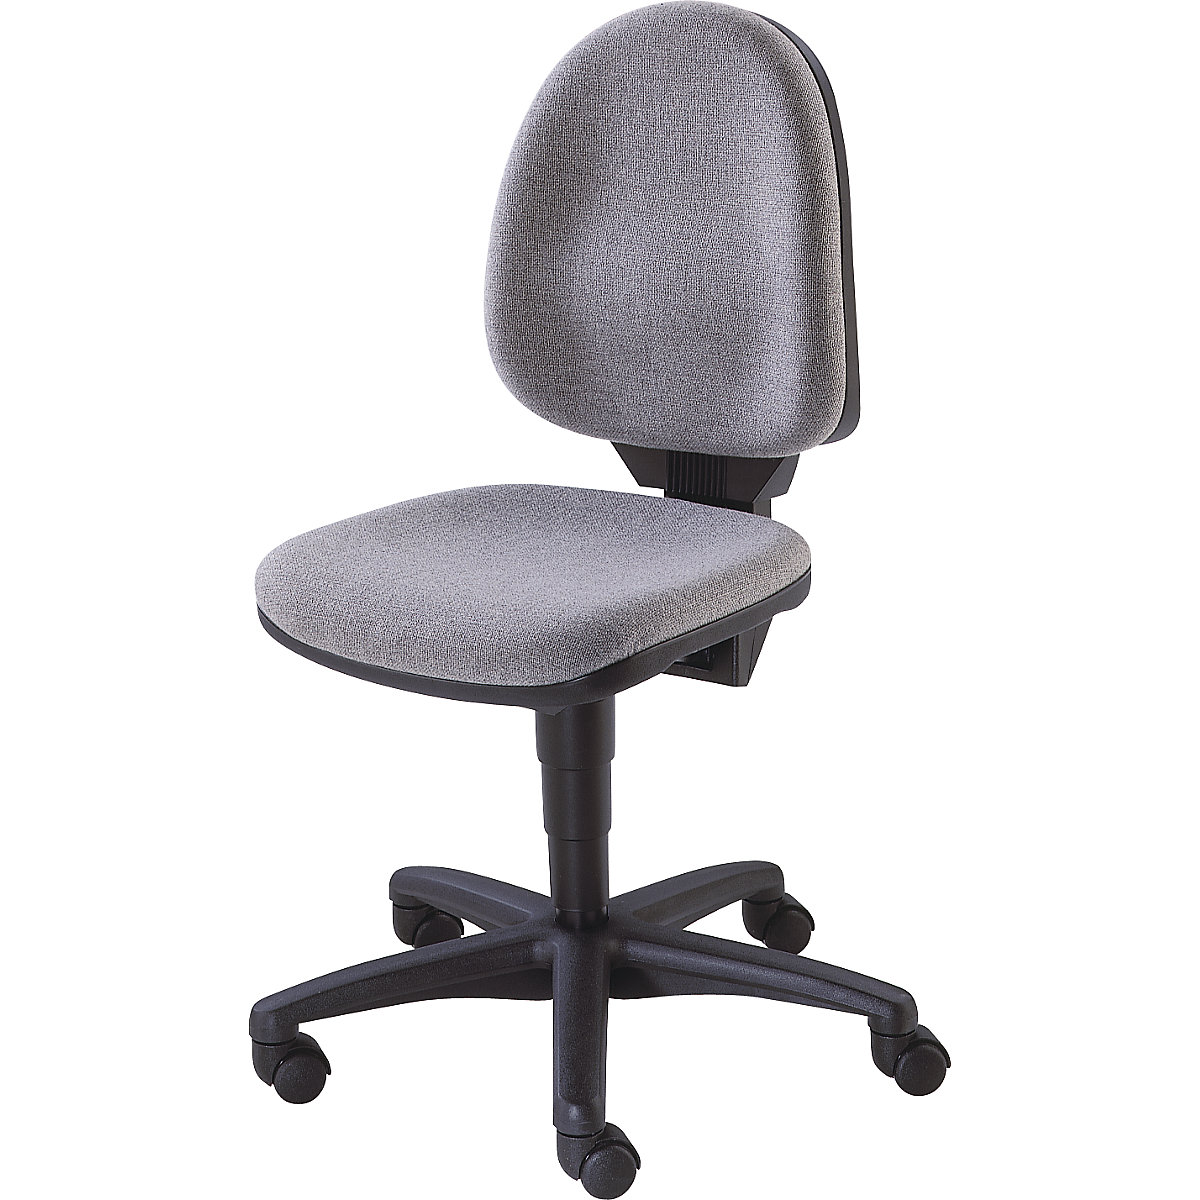 Štandardná otočná stolička – Topstar, bez lakťových opierok, operadlo 450 mm, látka šedá, podstavec čierna, od 2 kusov-3